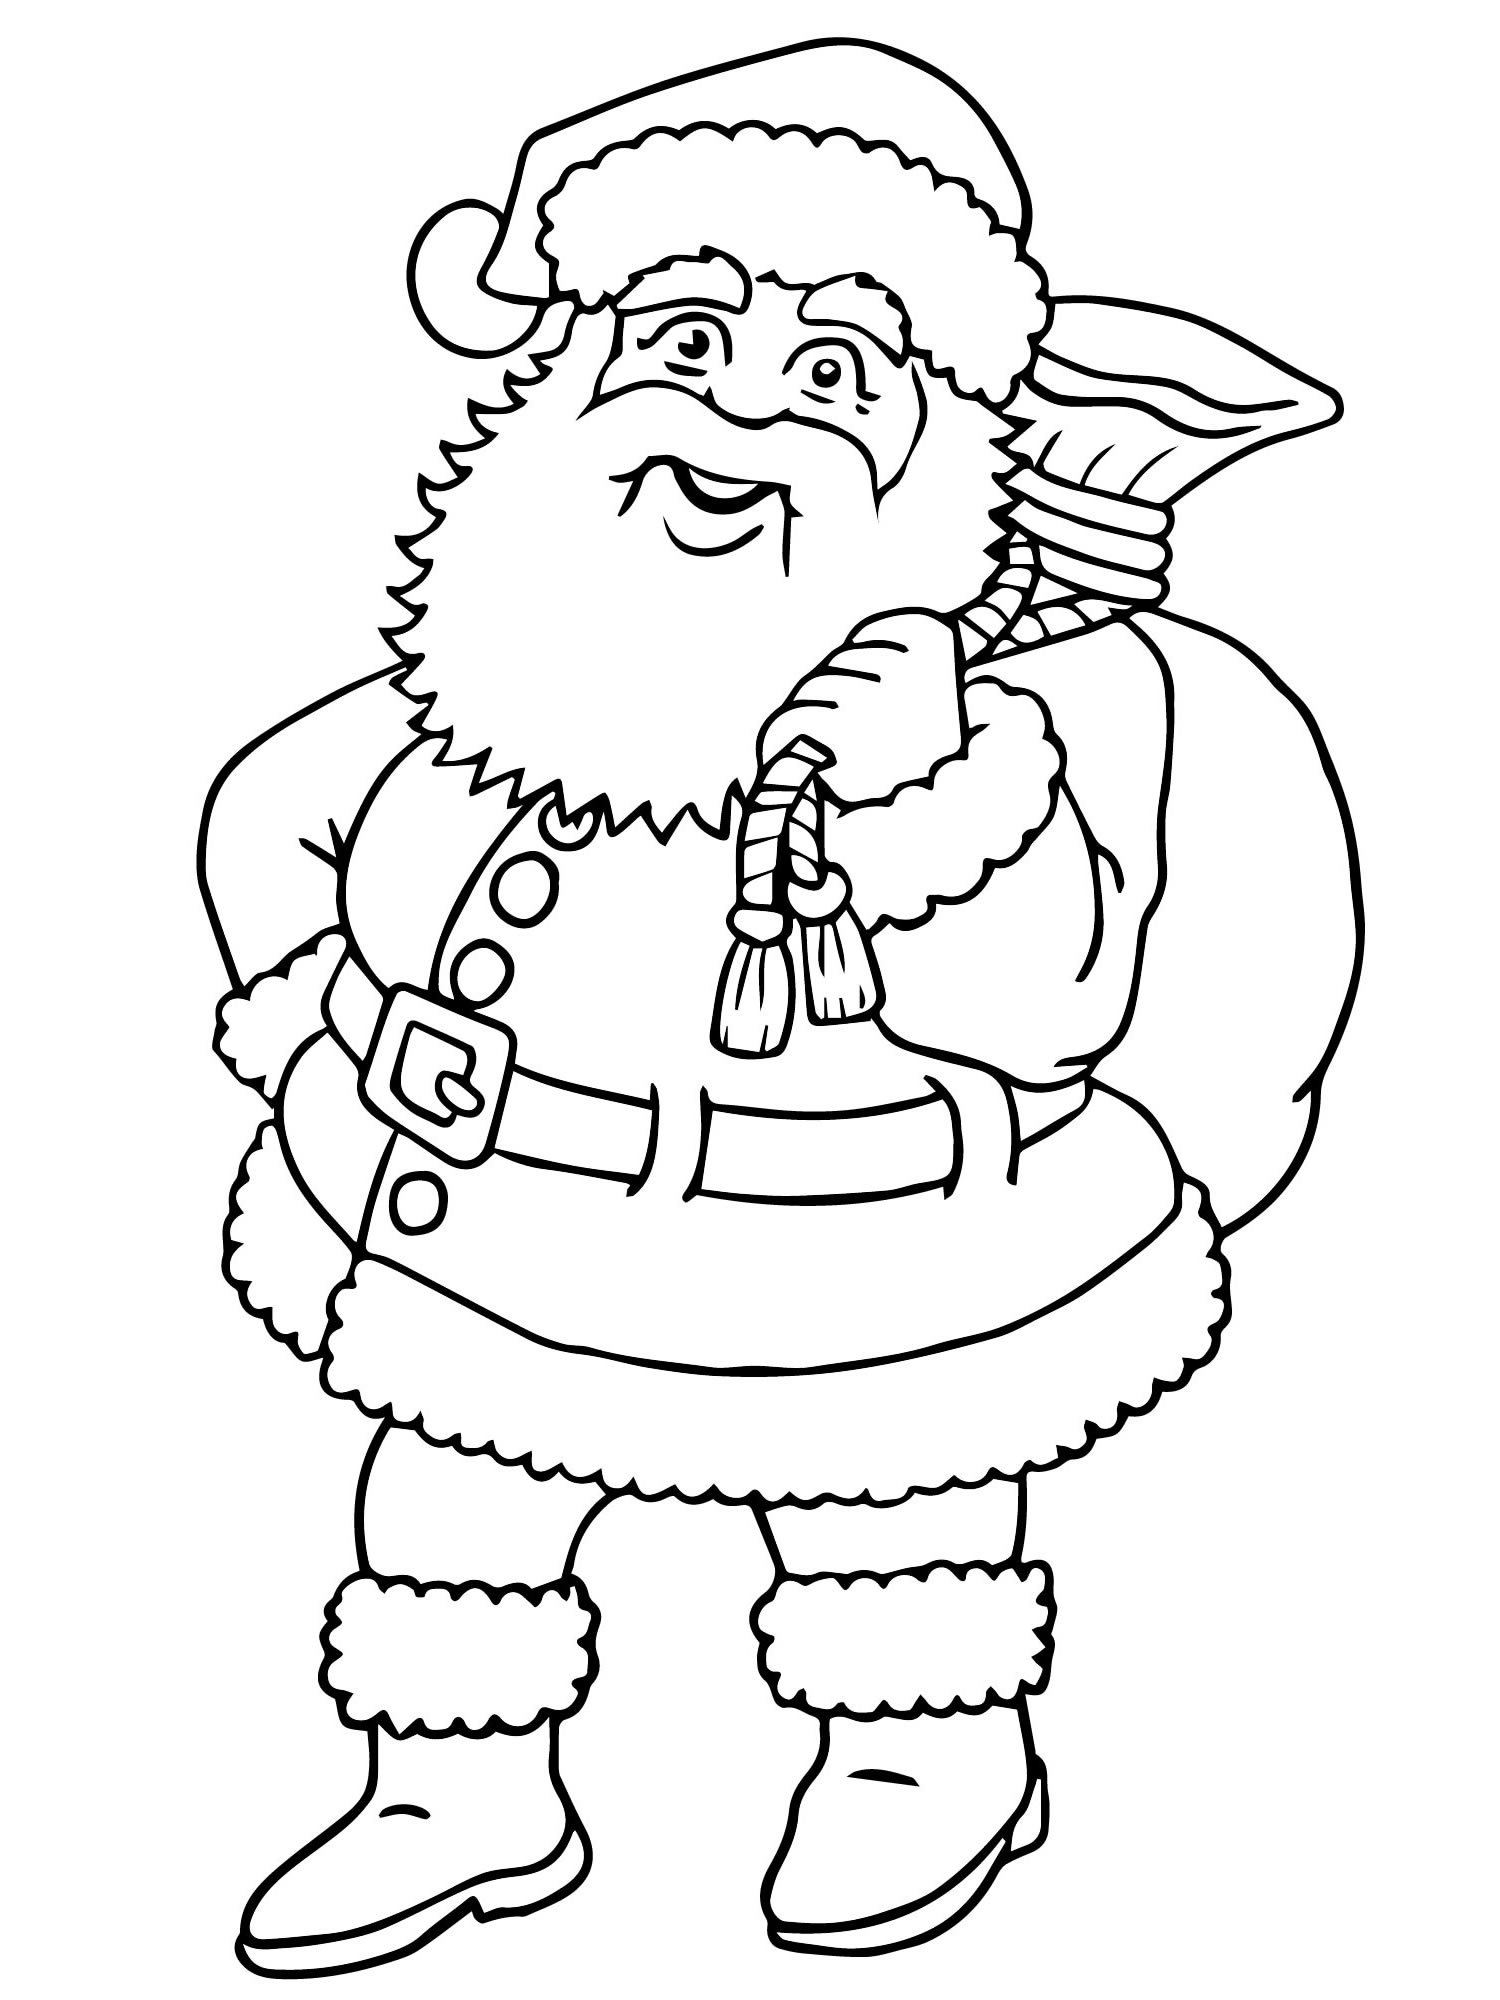 Санта-Клаус раскраска для детей